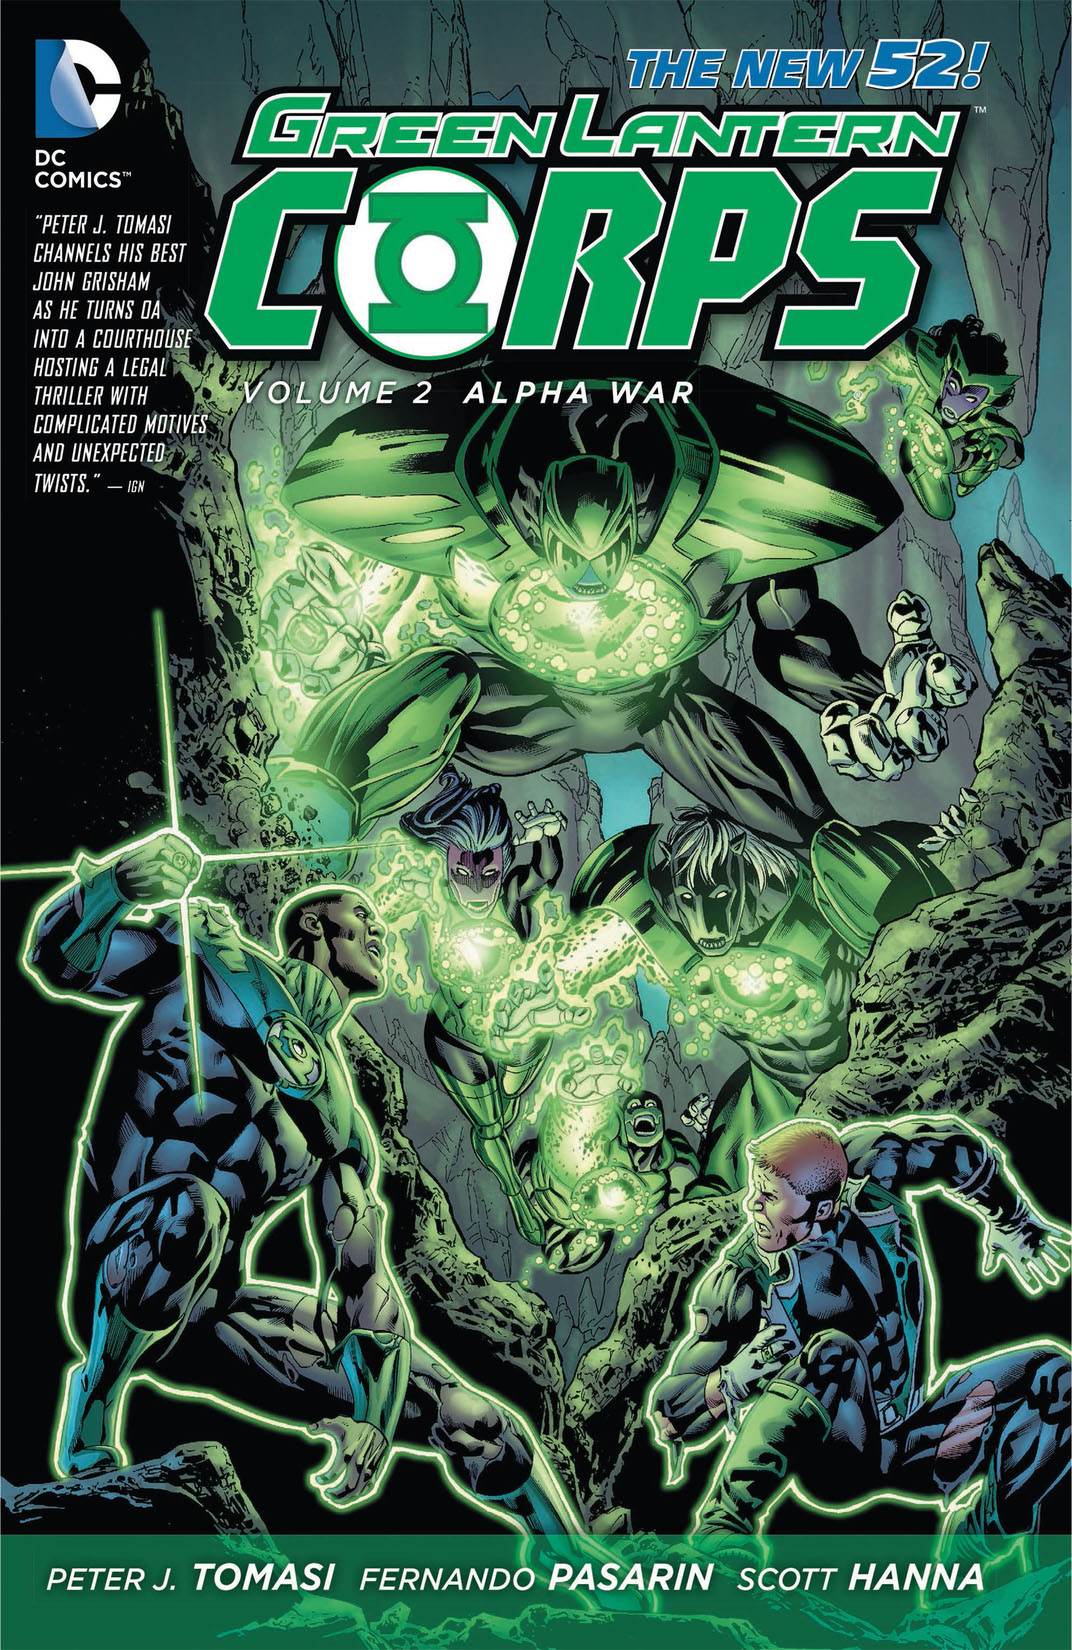 Green Lantern Corps Vol. 2: Alpha War preview images